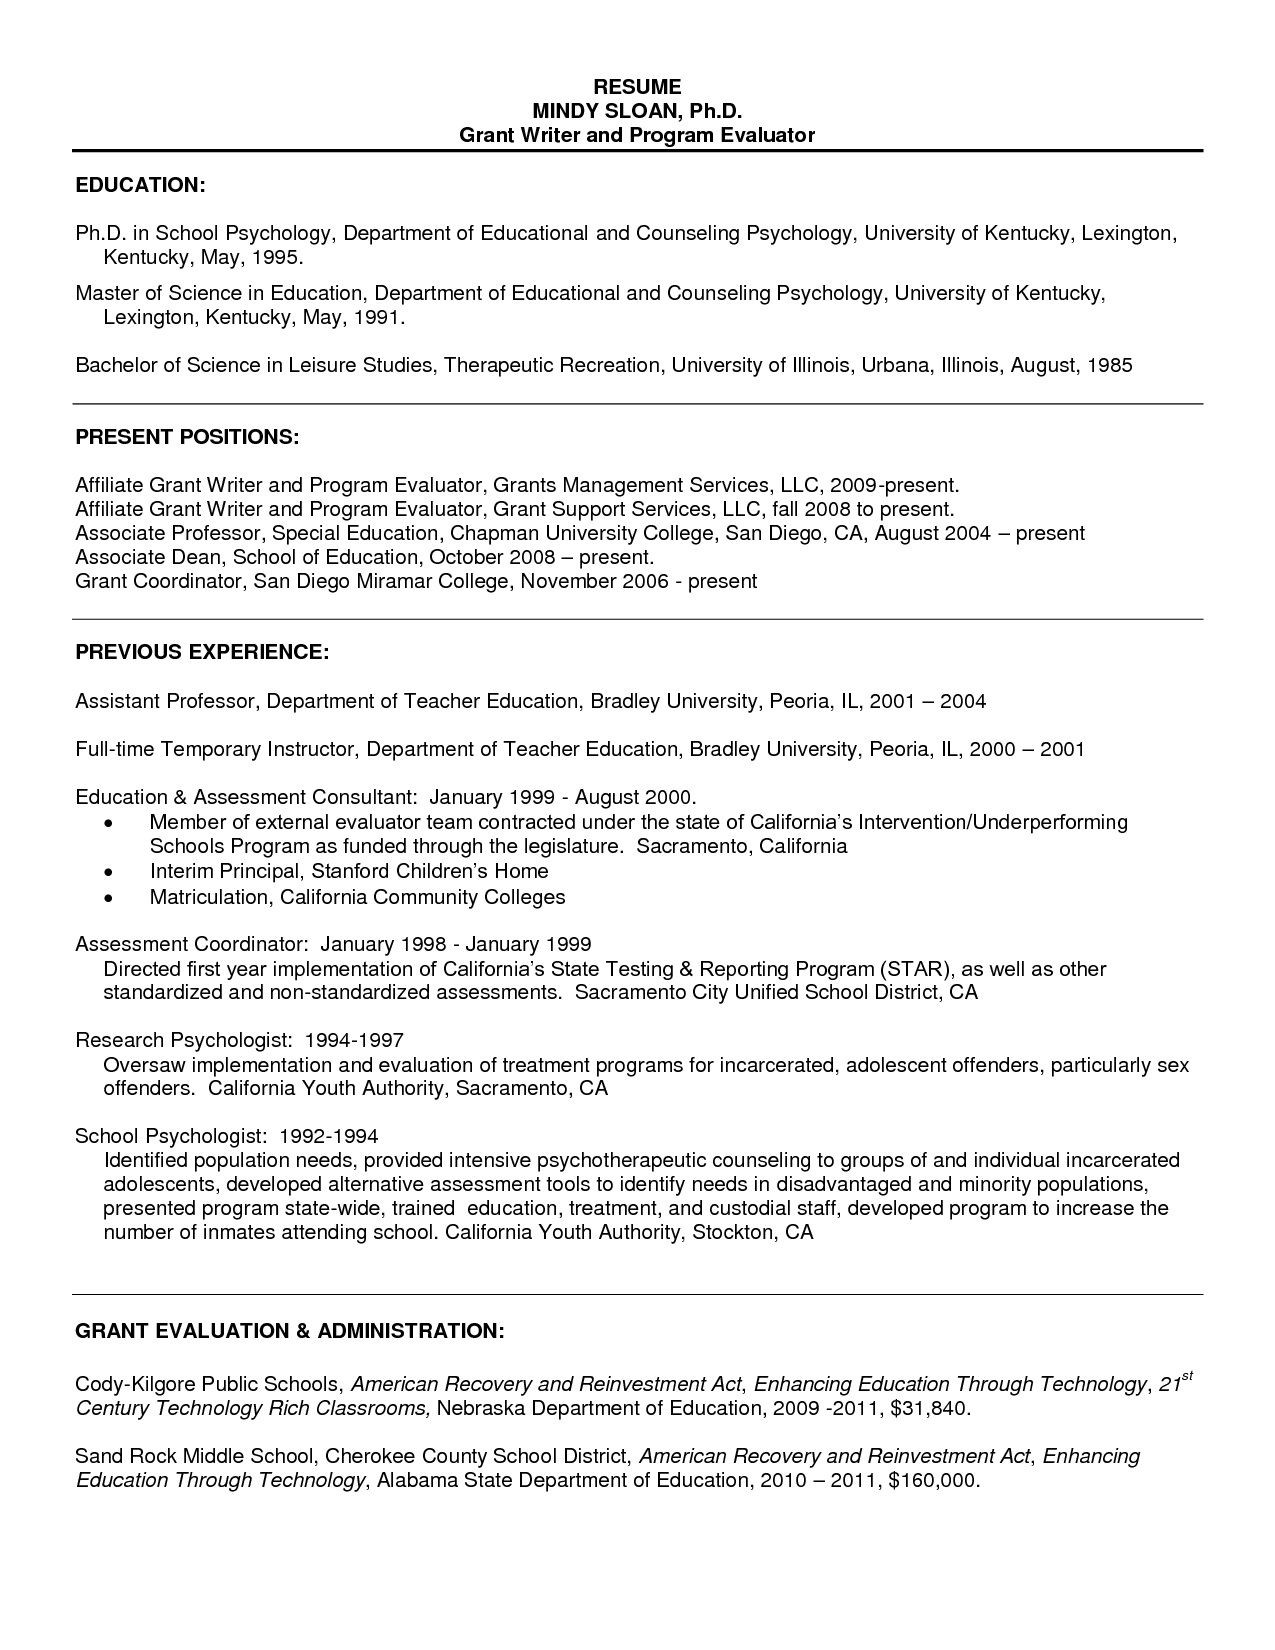 Professional Resume for Graduate School Samples Resume Sample for Psychology Graduate Free Resume Templates …